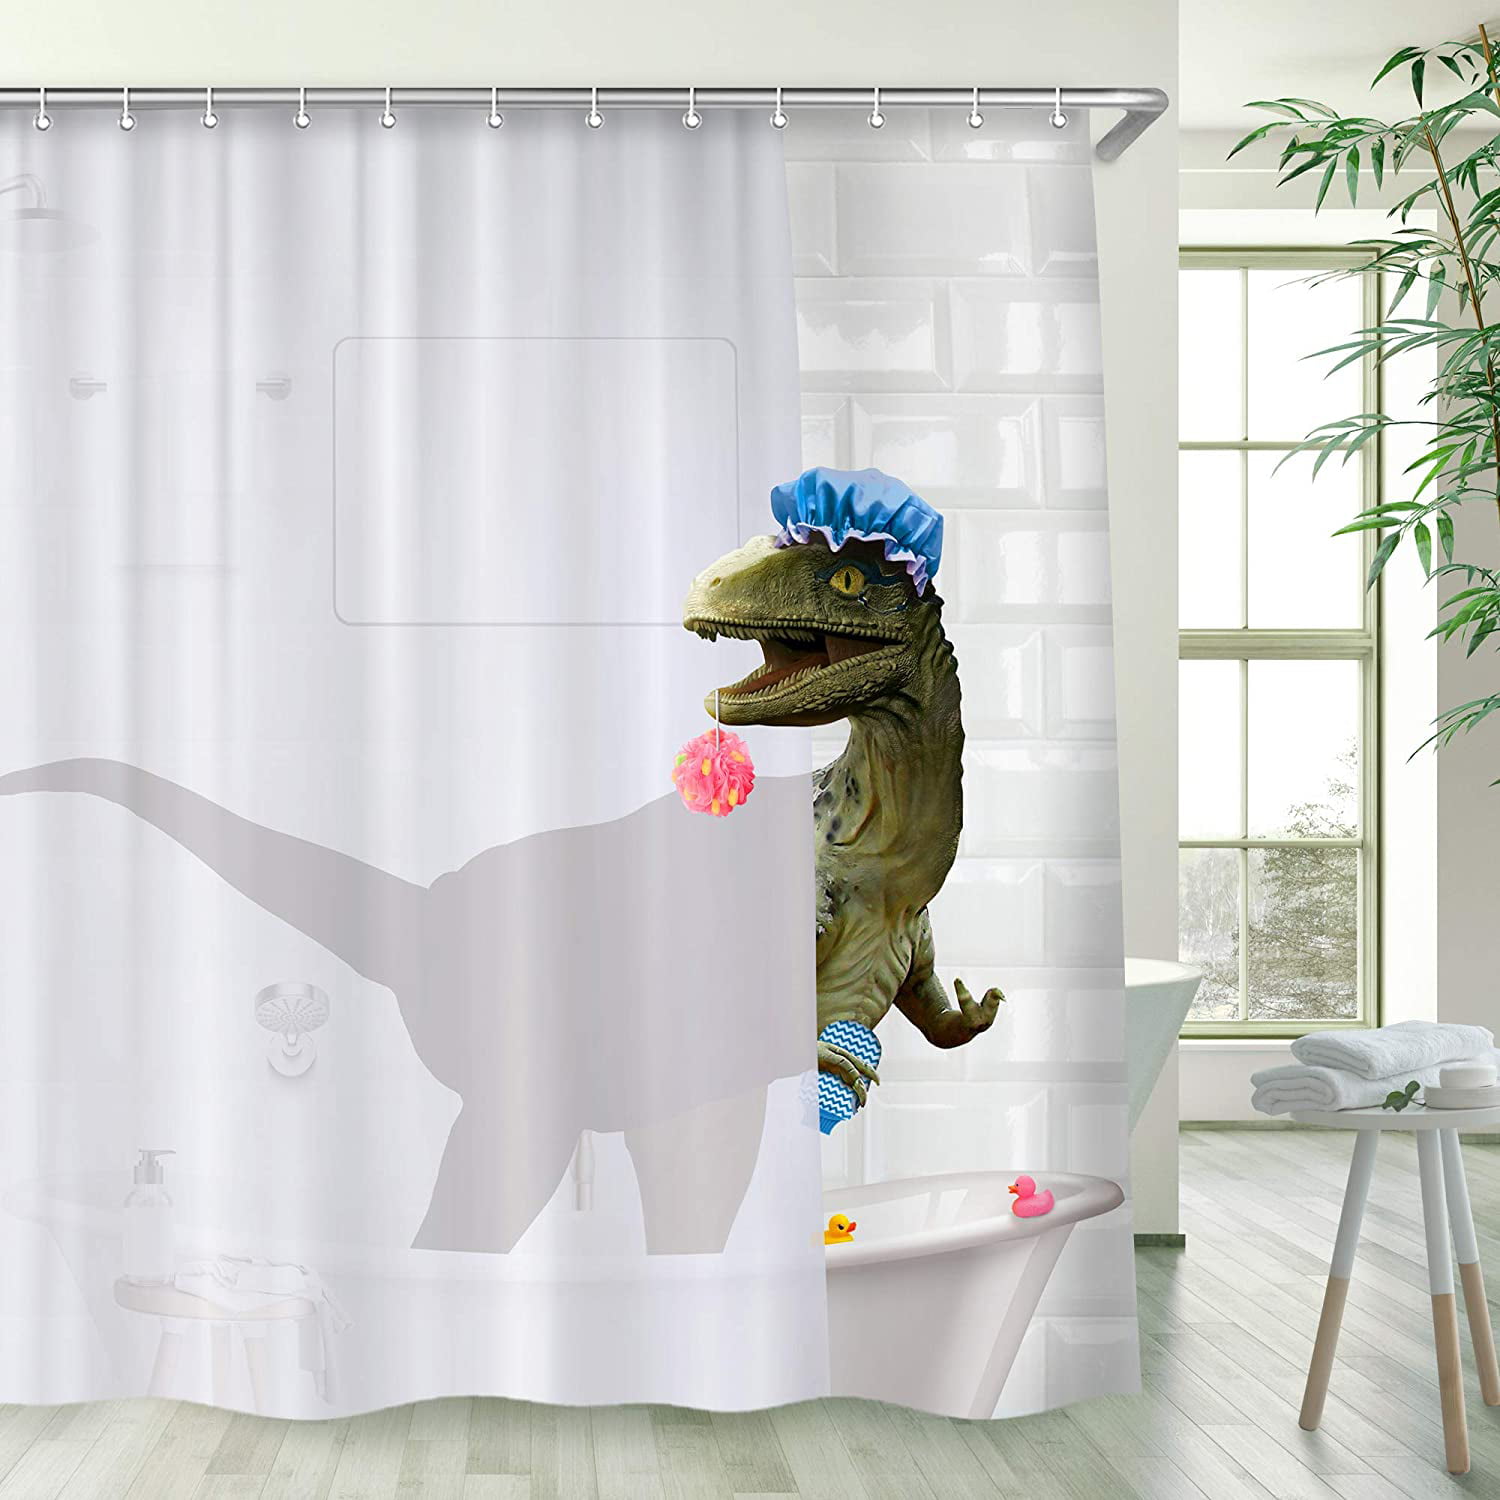 Fierce Various Dinosaurs 3D Shower Curtain Waterproof Fabric Bathroom Decoration 